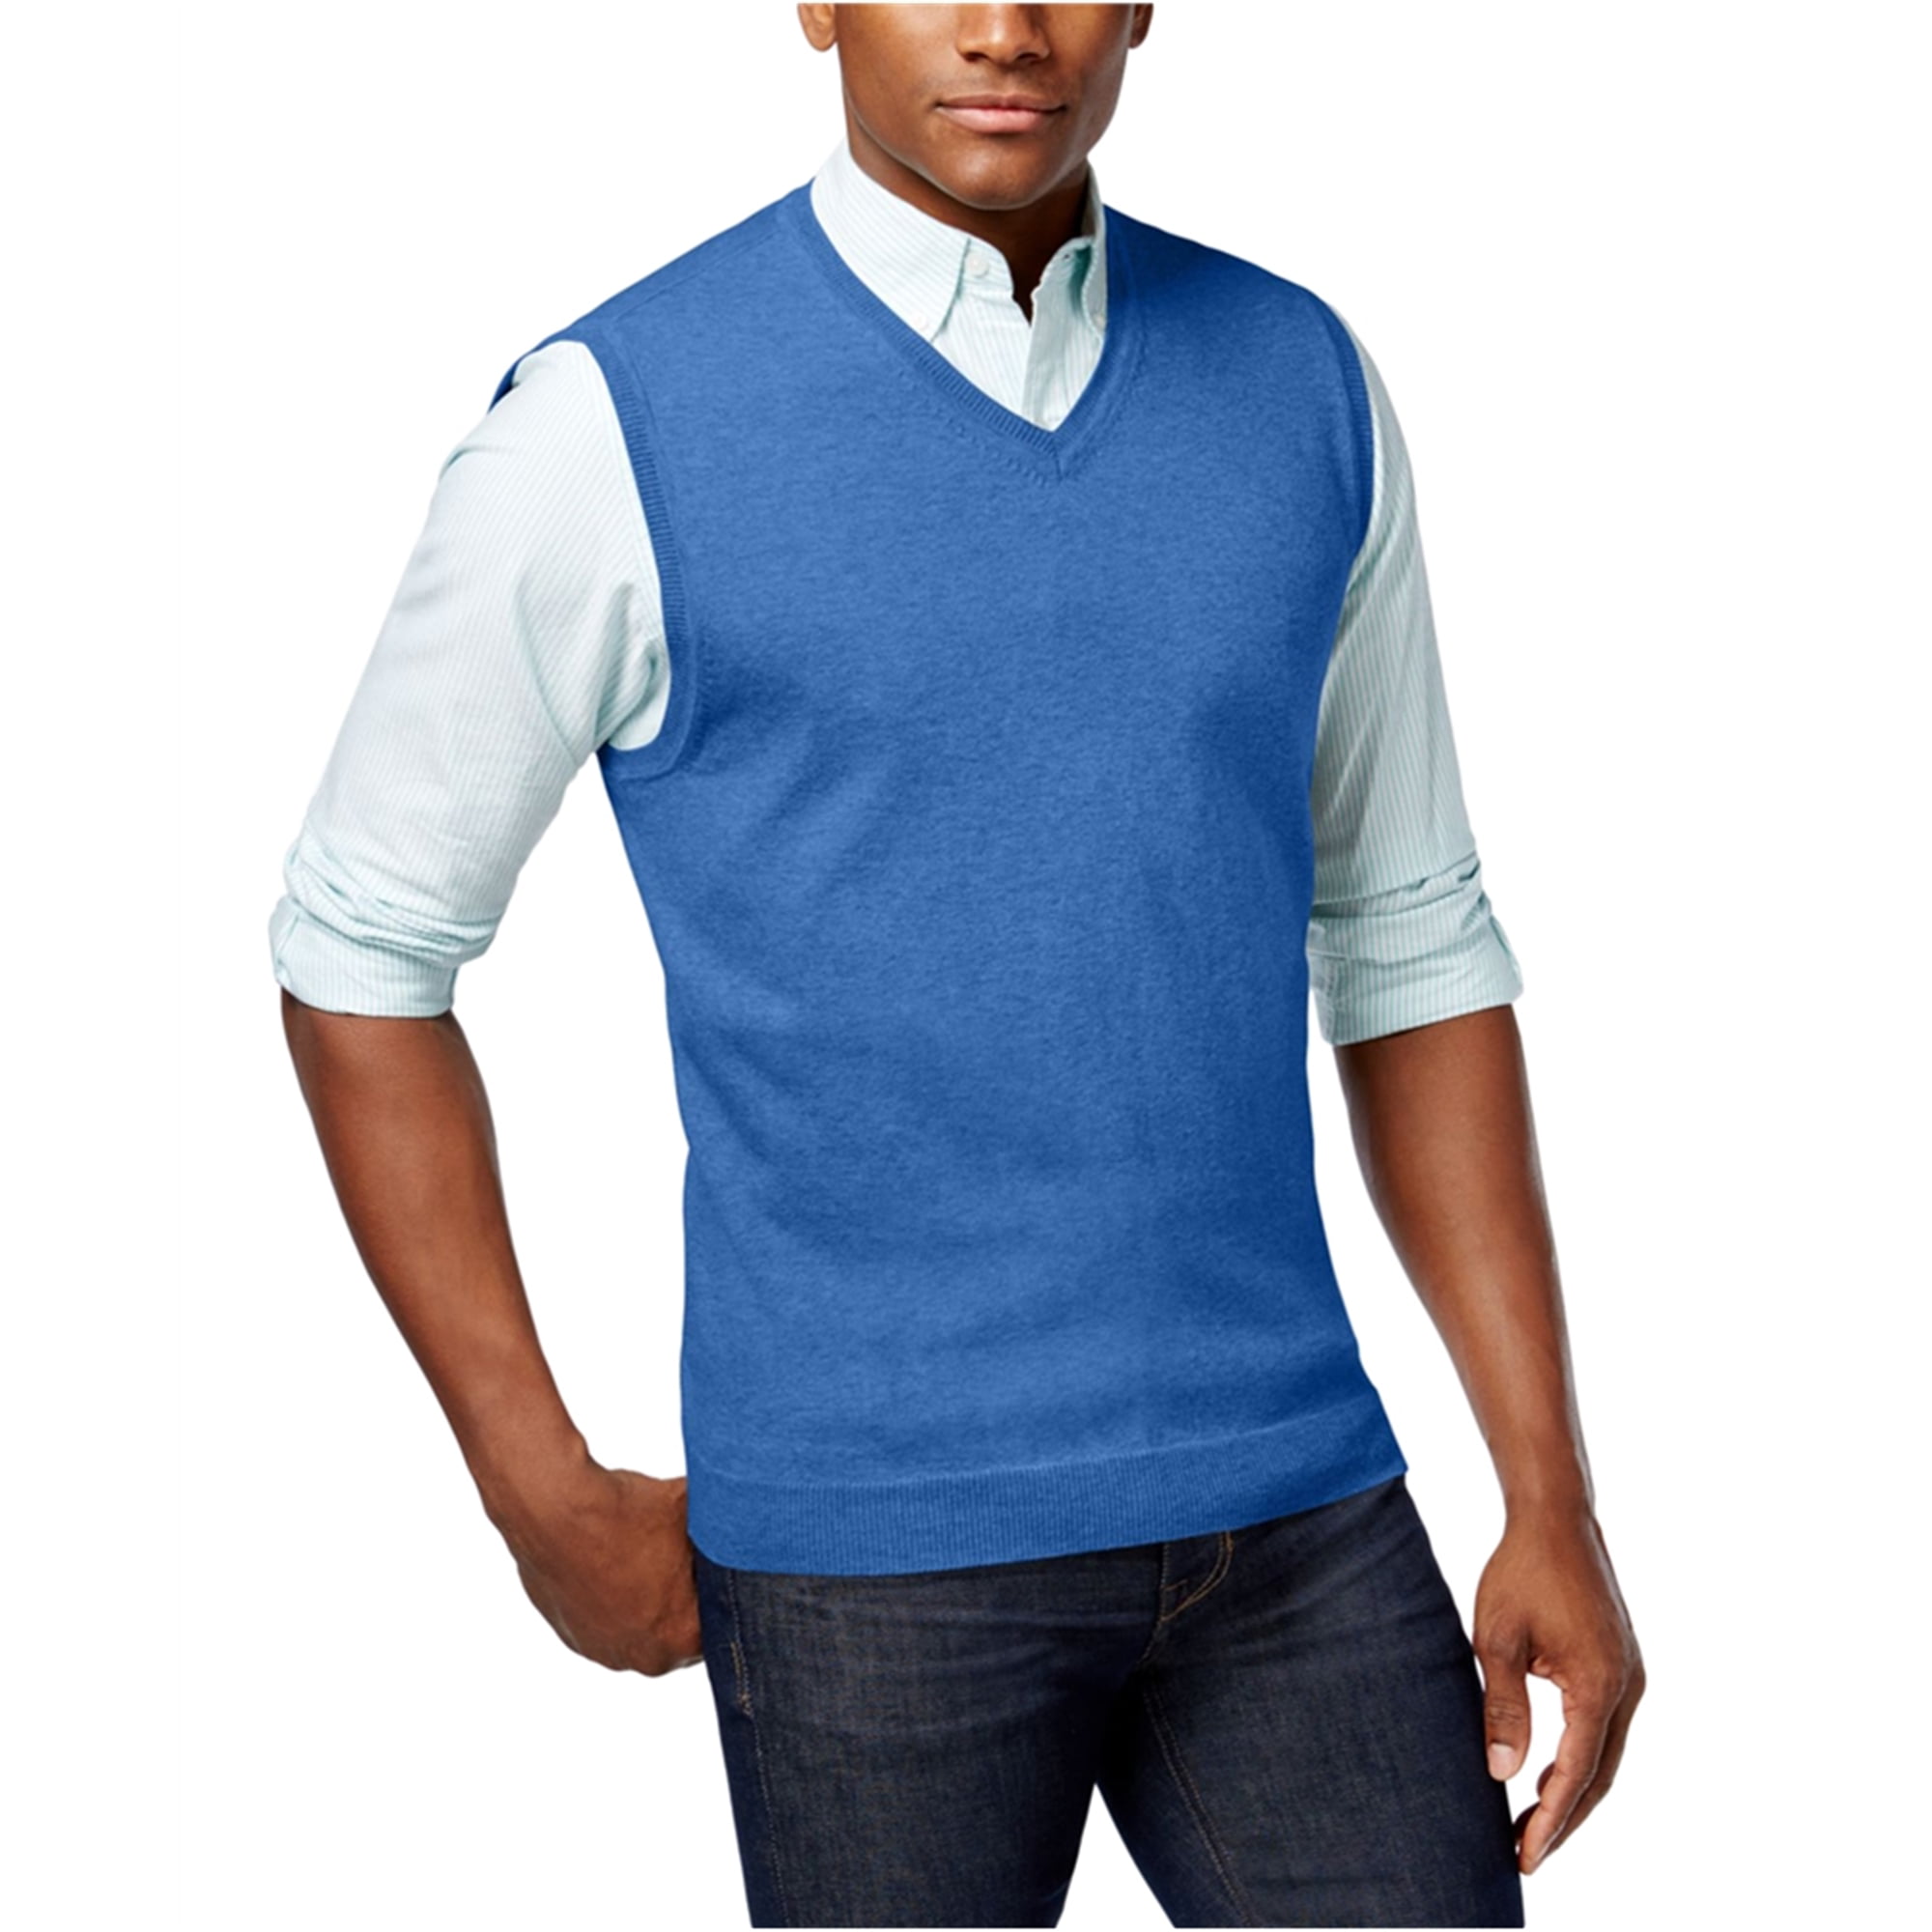 Club Room Mens Knit V-Neck Sweater Vest, Blue, Small